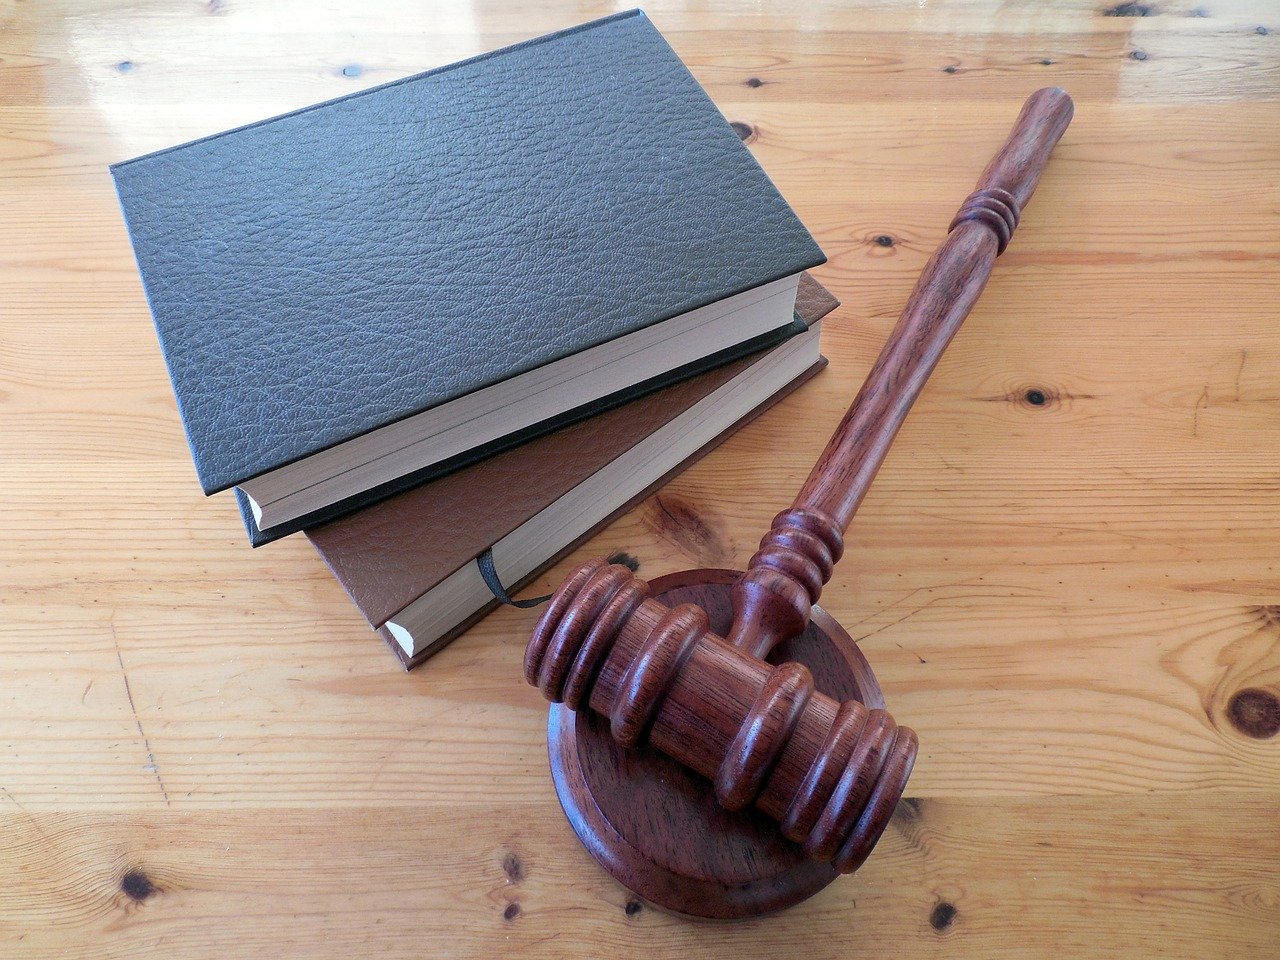 How do you litigate a case?